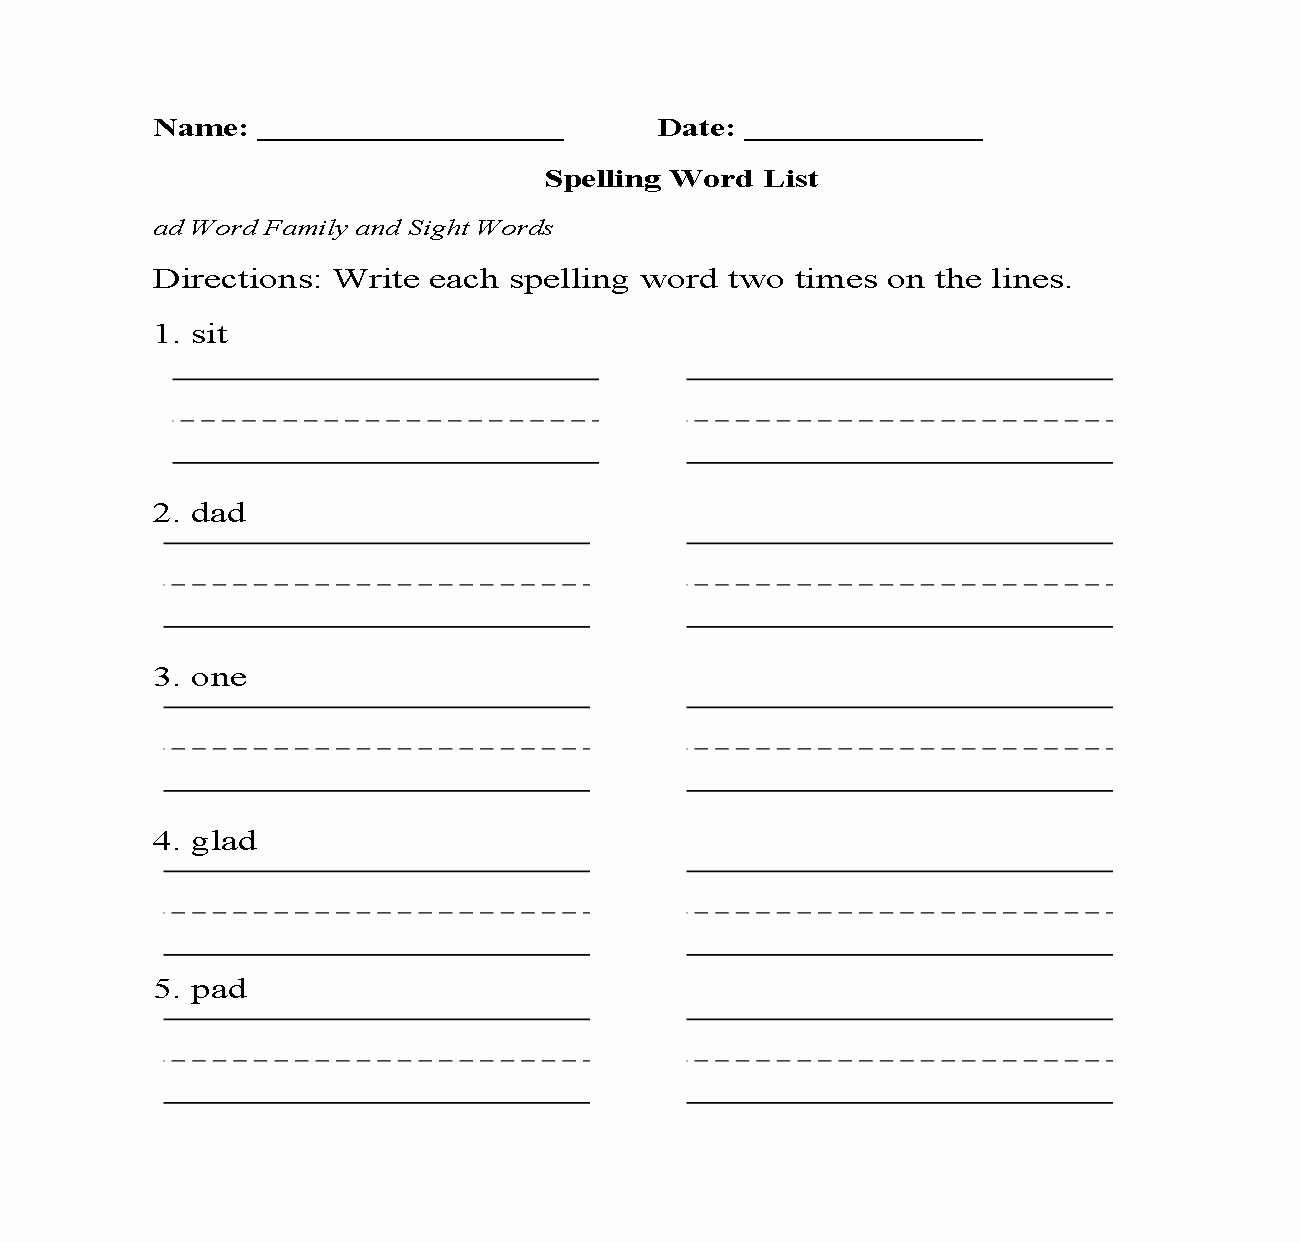 Spelling Worksheets 2nd Graders Fresh 2nd Grade Spelling Worksheets Best Coloring Pages for Kids